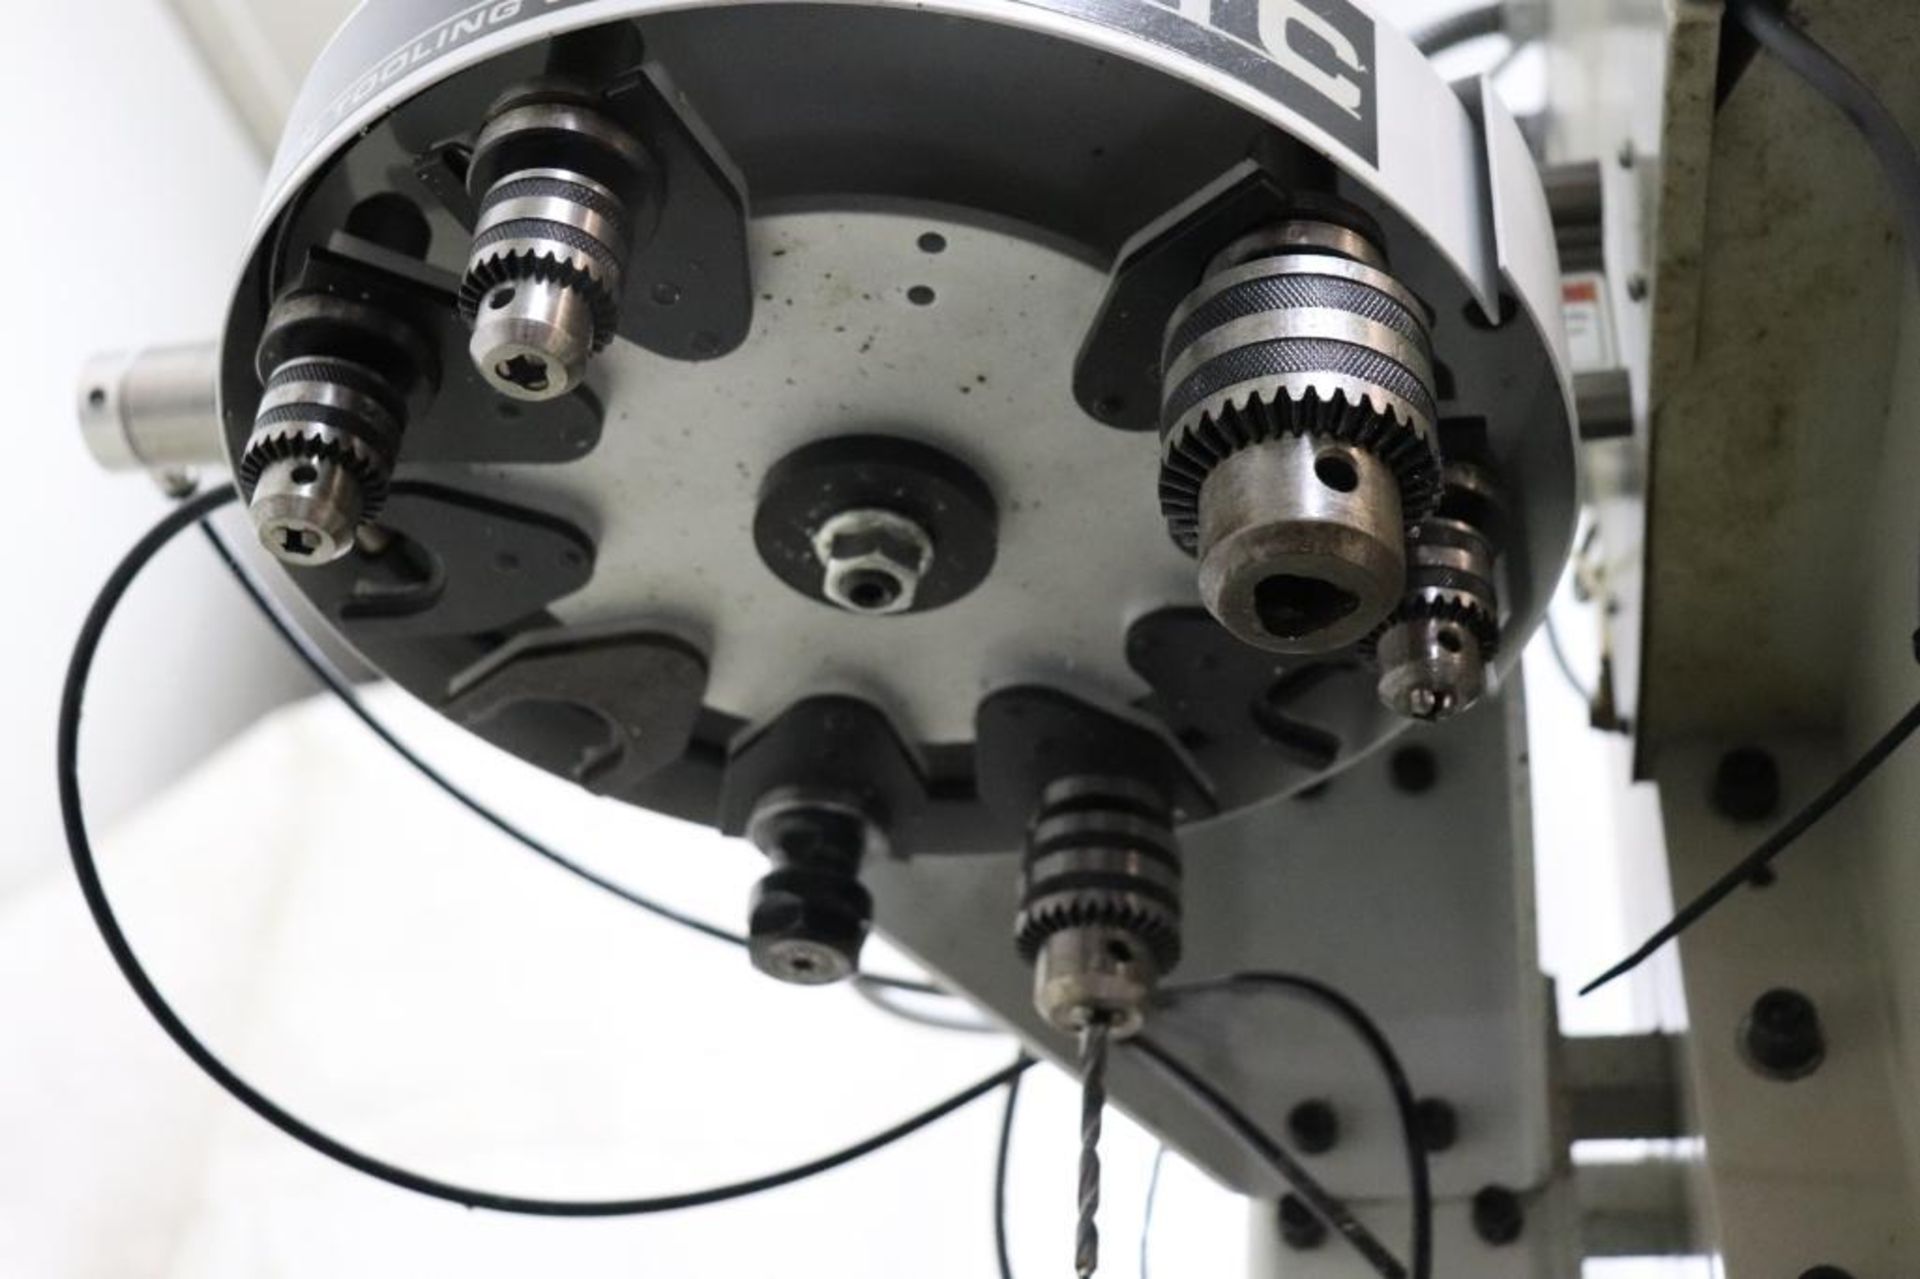 Tormach PCNC1100 CNC milling machine - Image 6 of 26